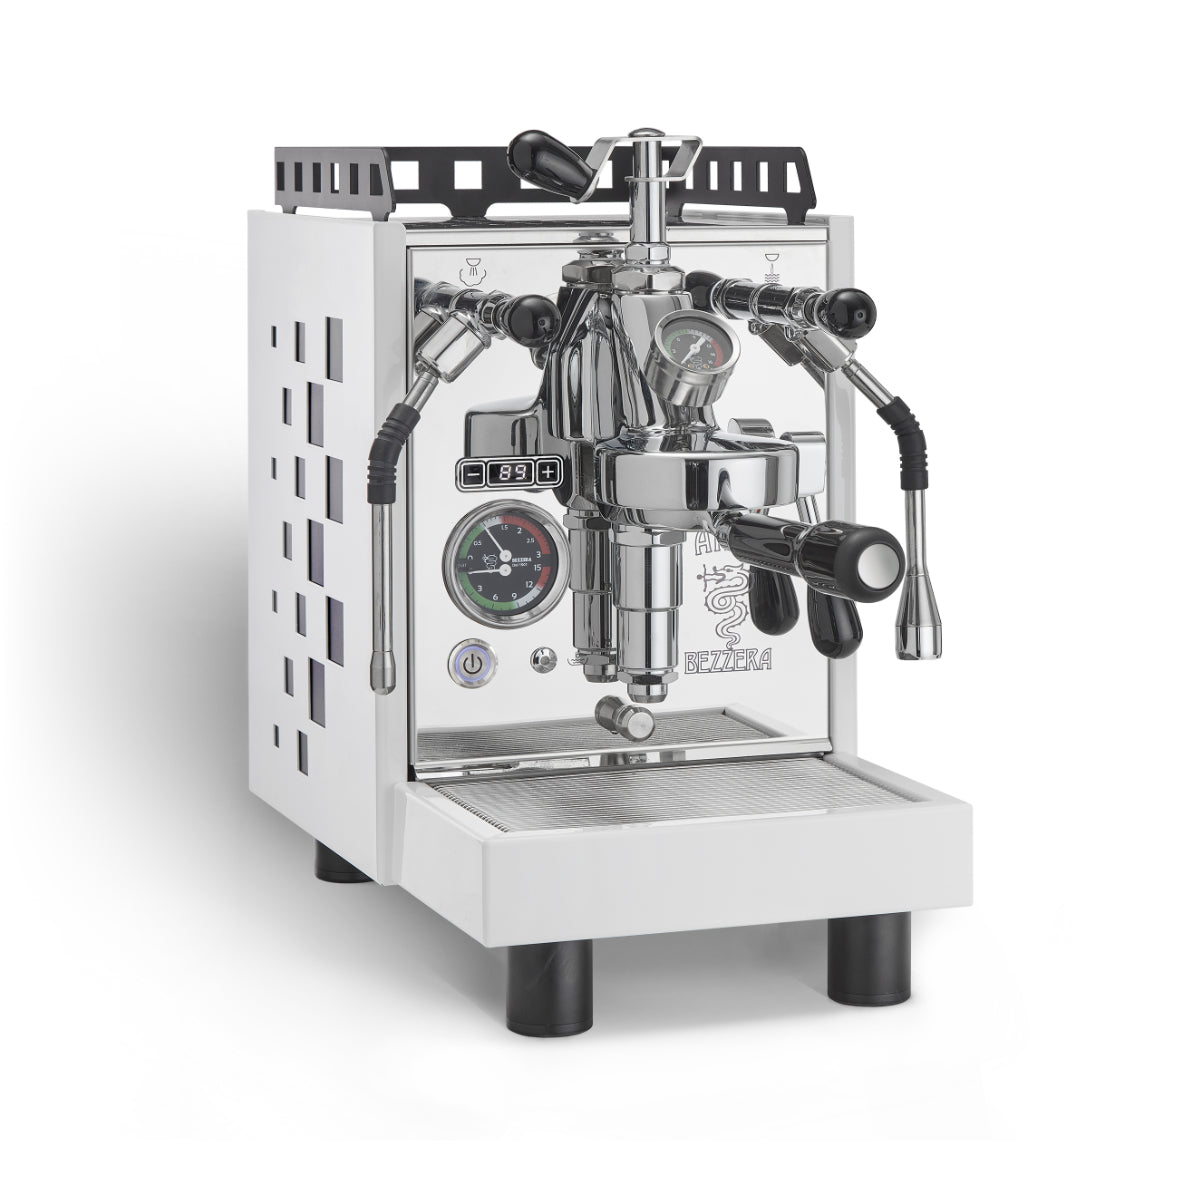 Bezzera Aria Top PID Semi-Automatic Espresso Machine with Flow Control (White)